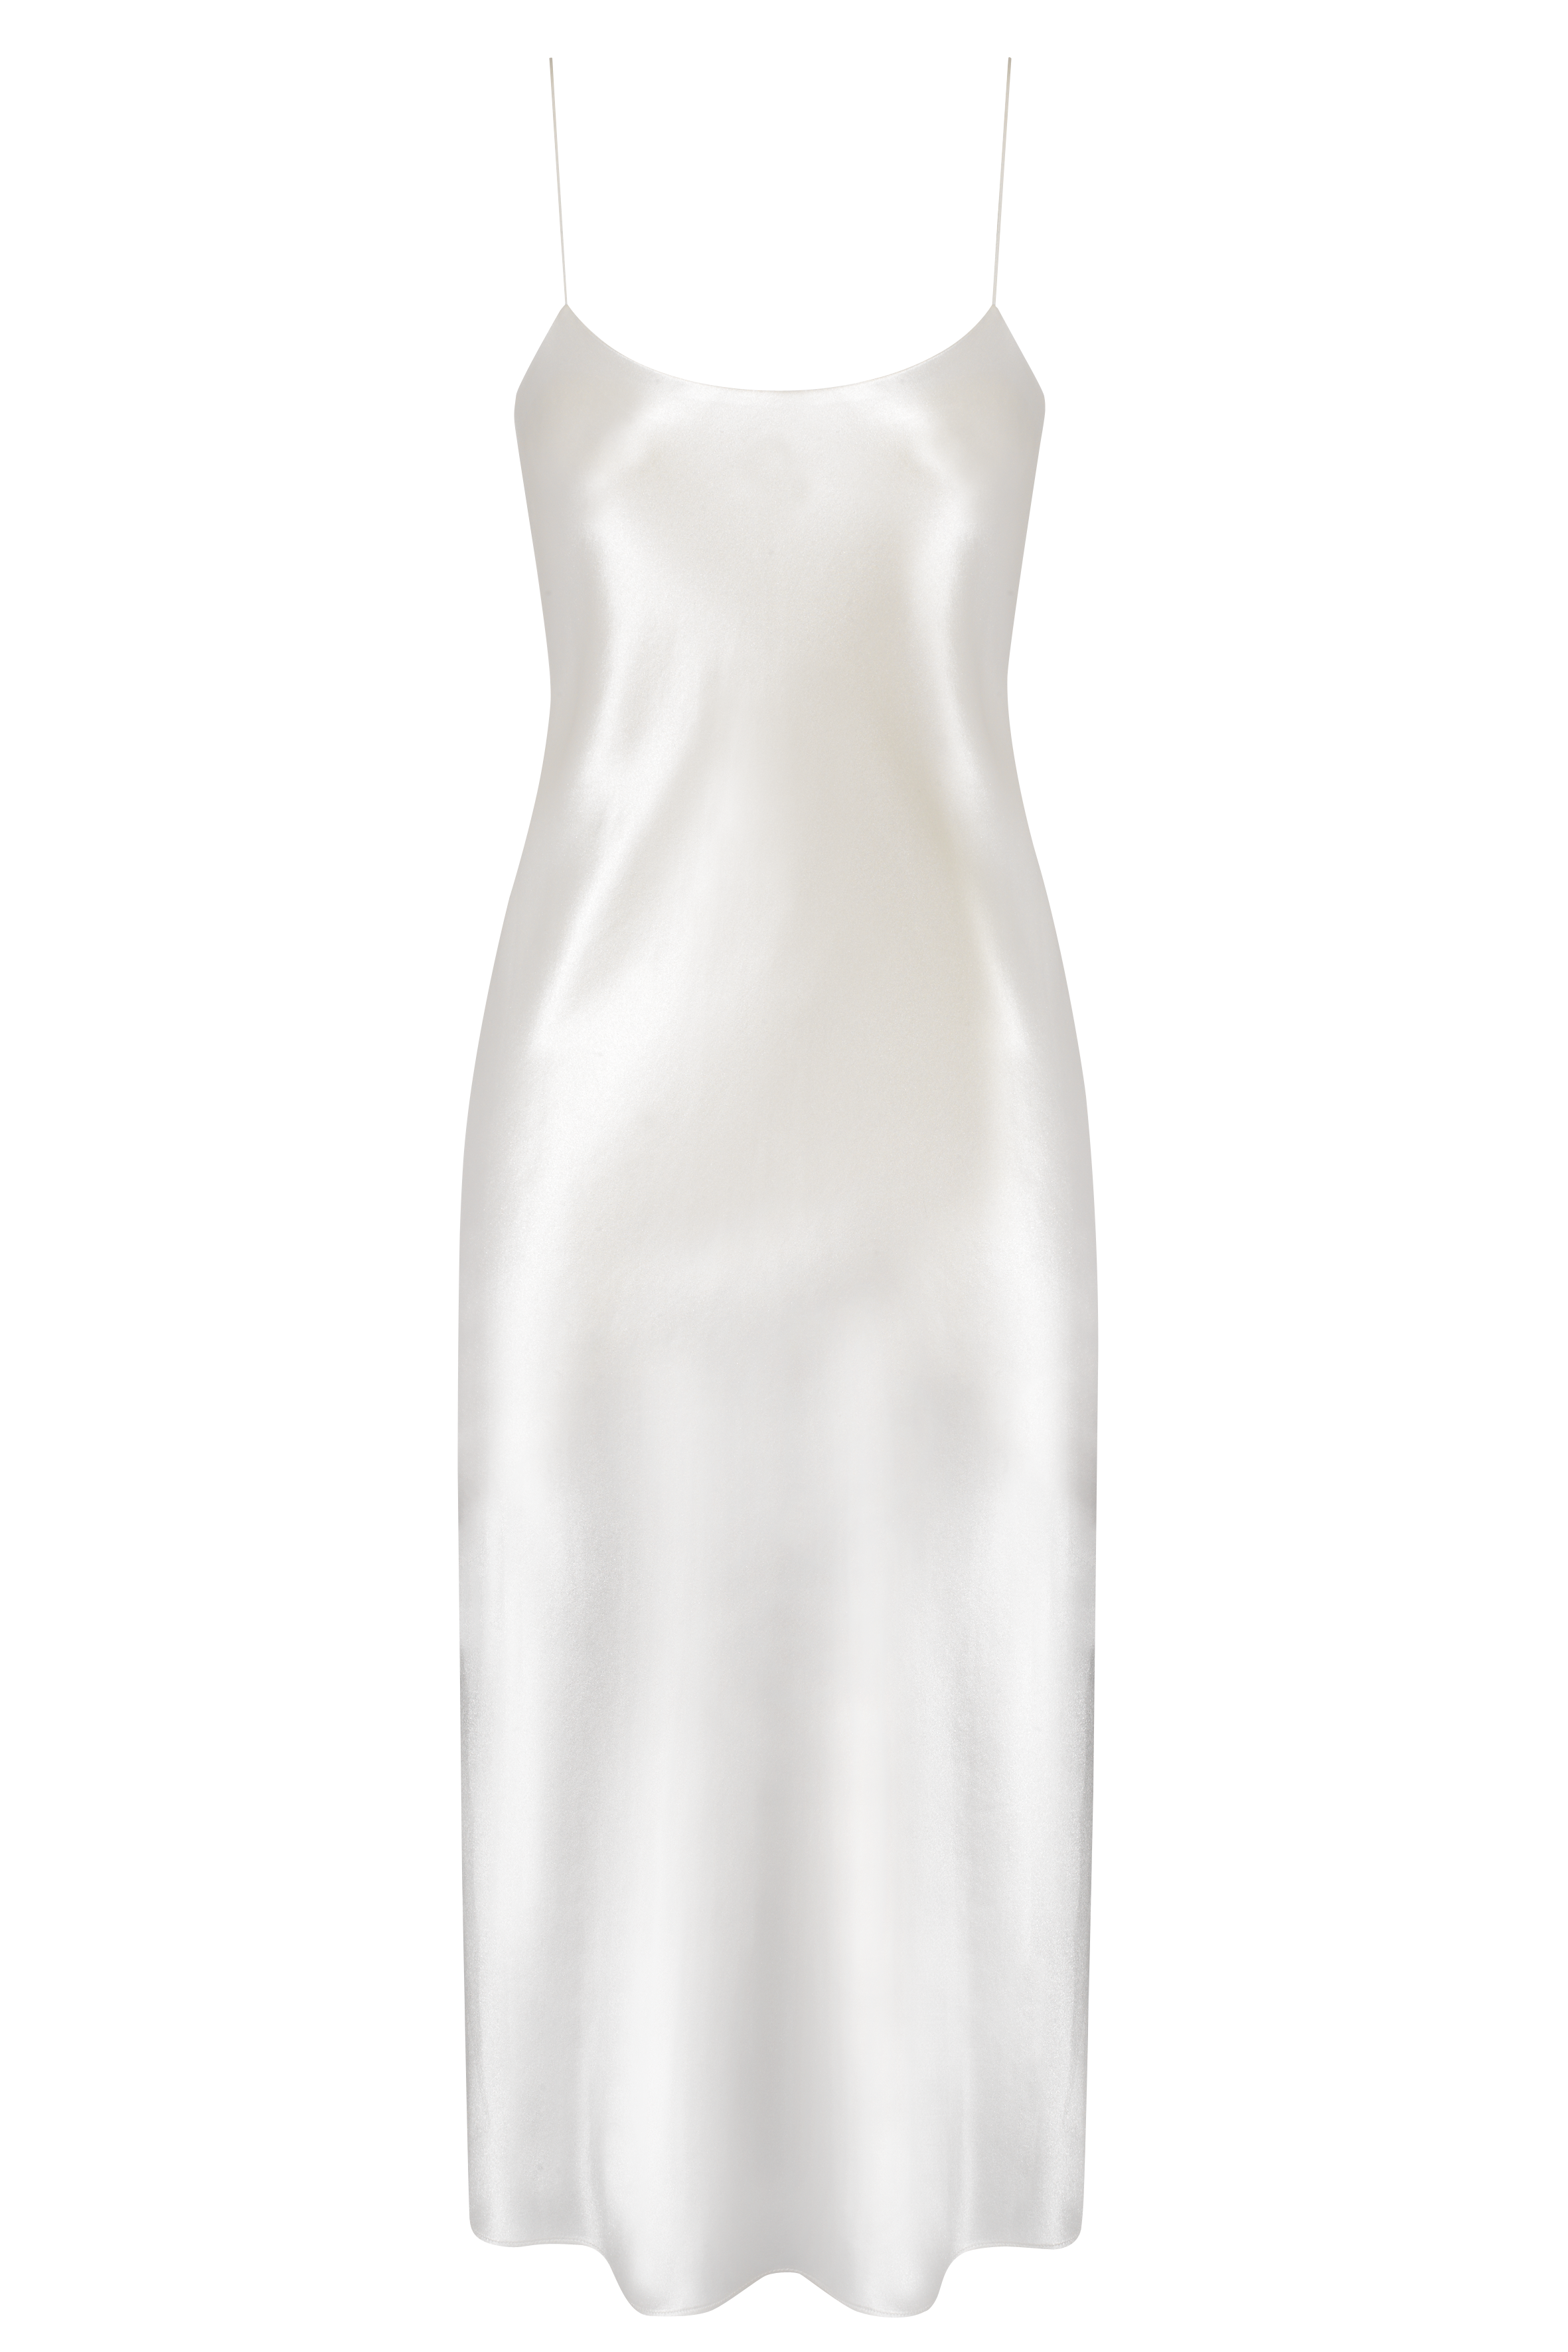 Essentials | The Carolyn | Silk Slip Dress in Ivory — REFINE